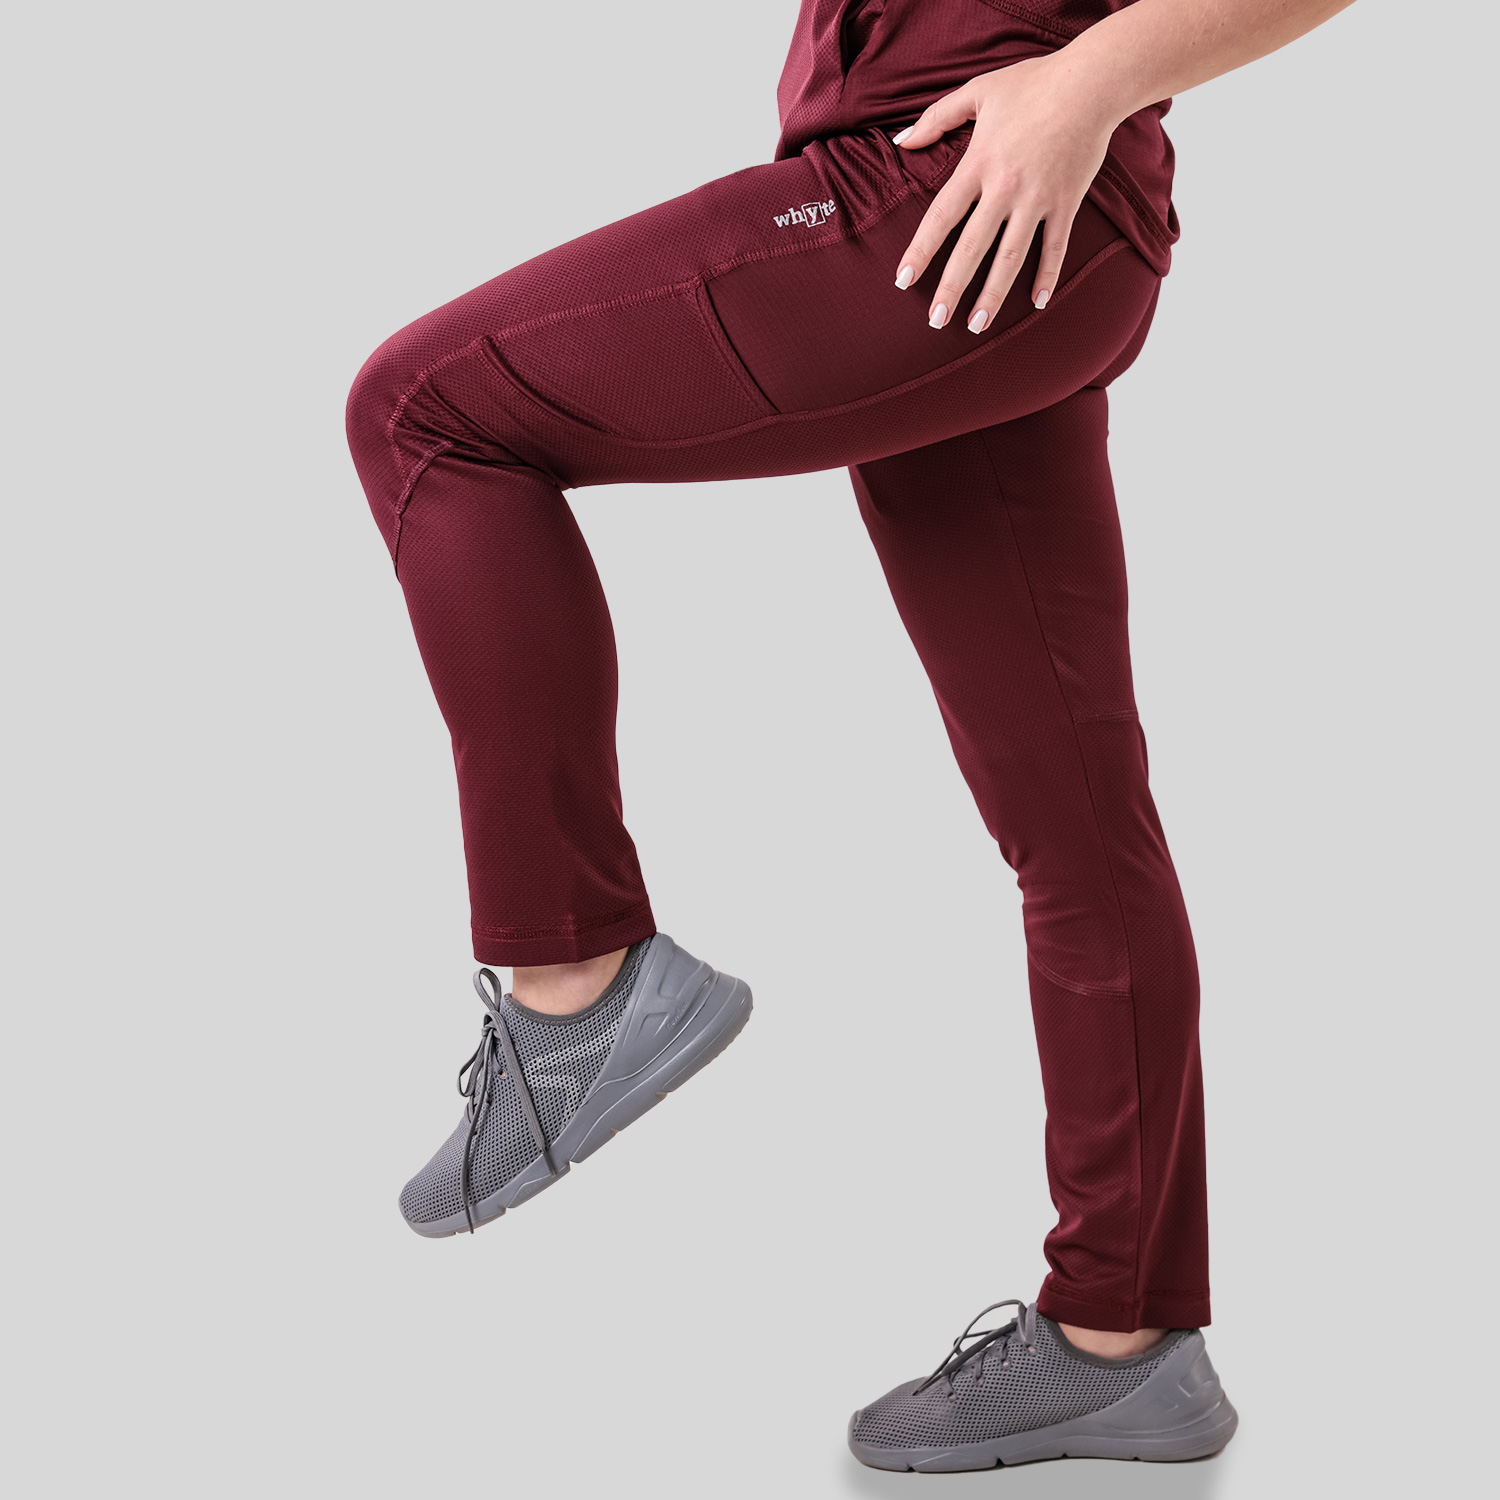 laura - active edition - pantalon